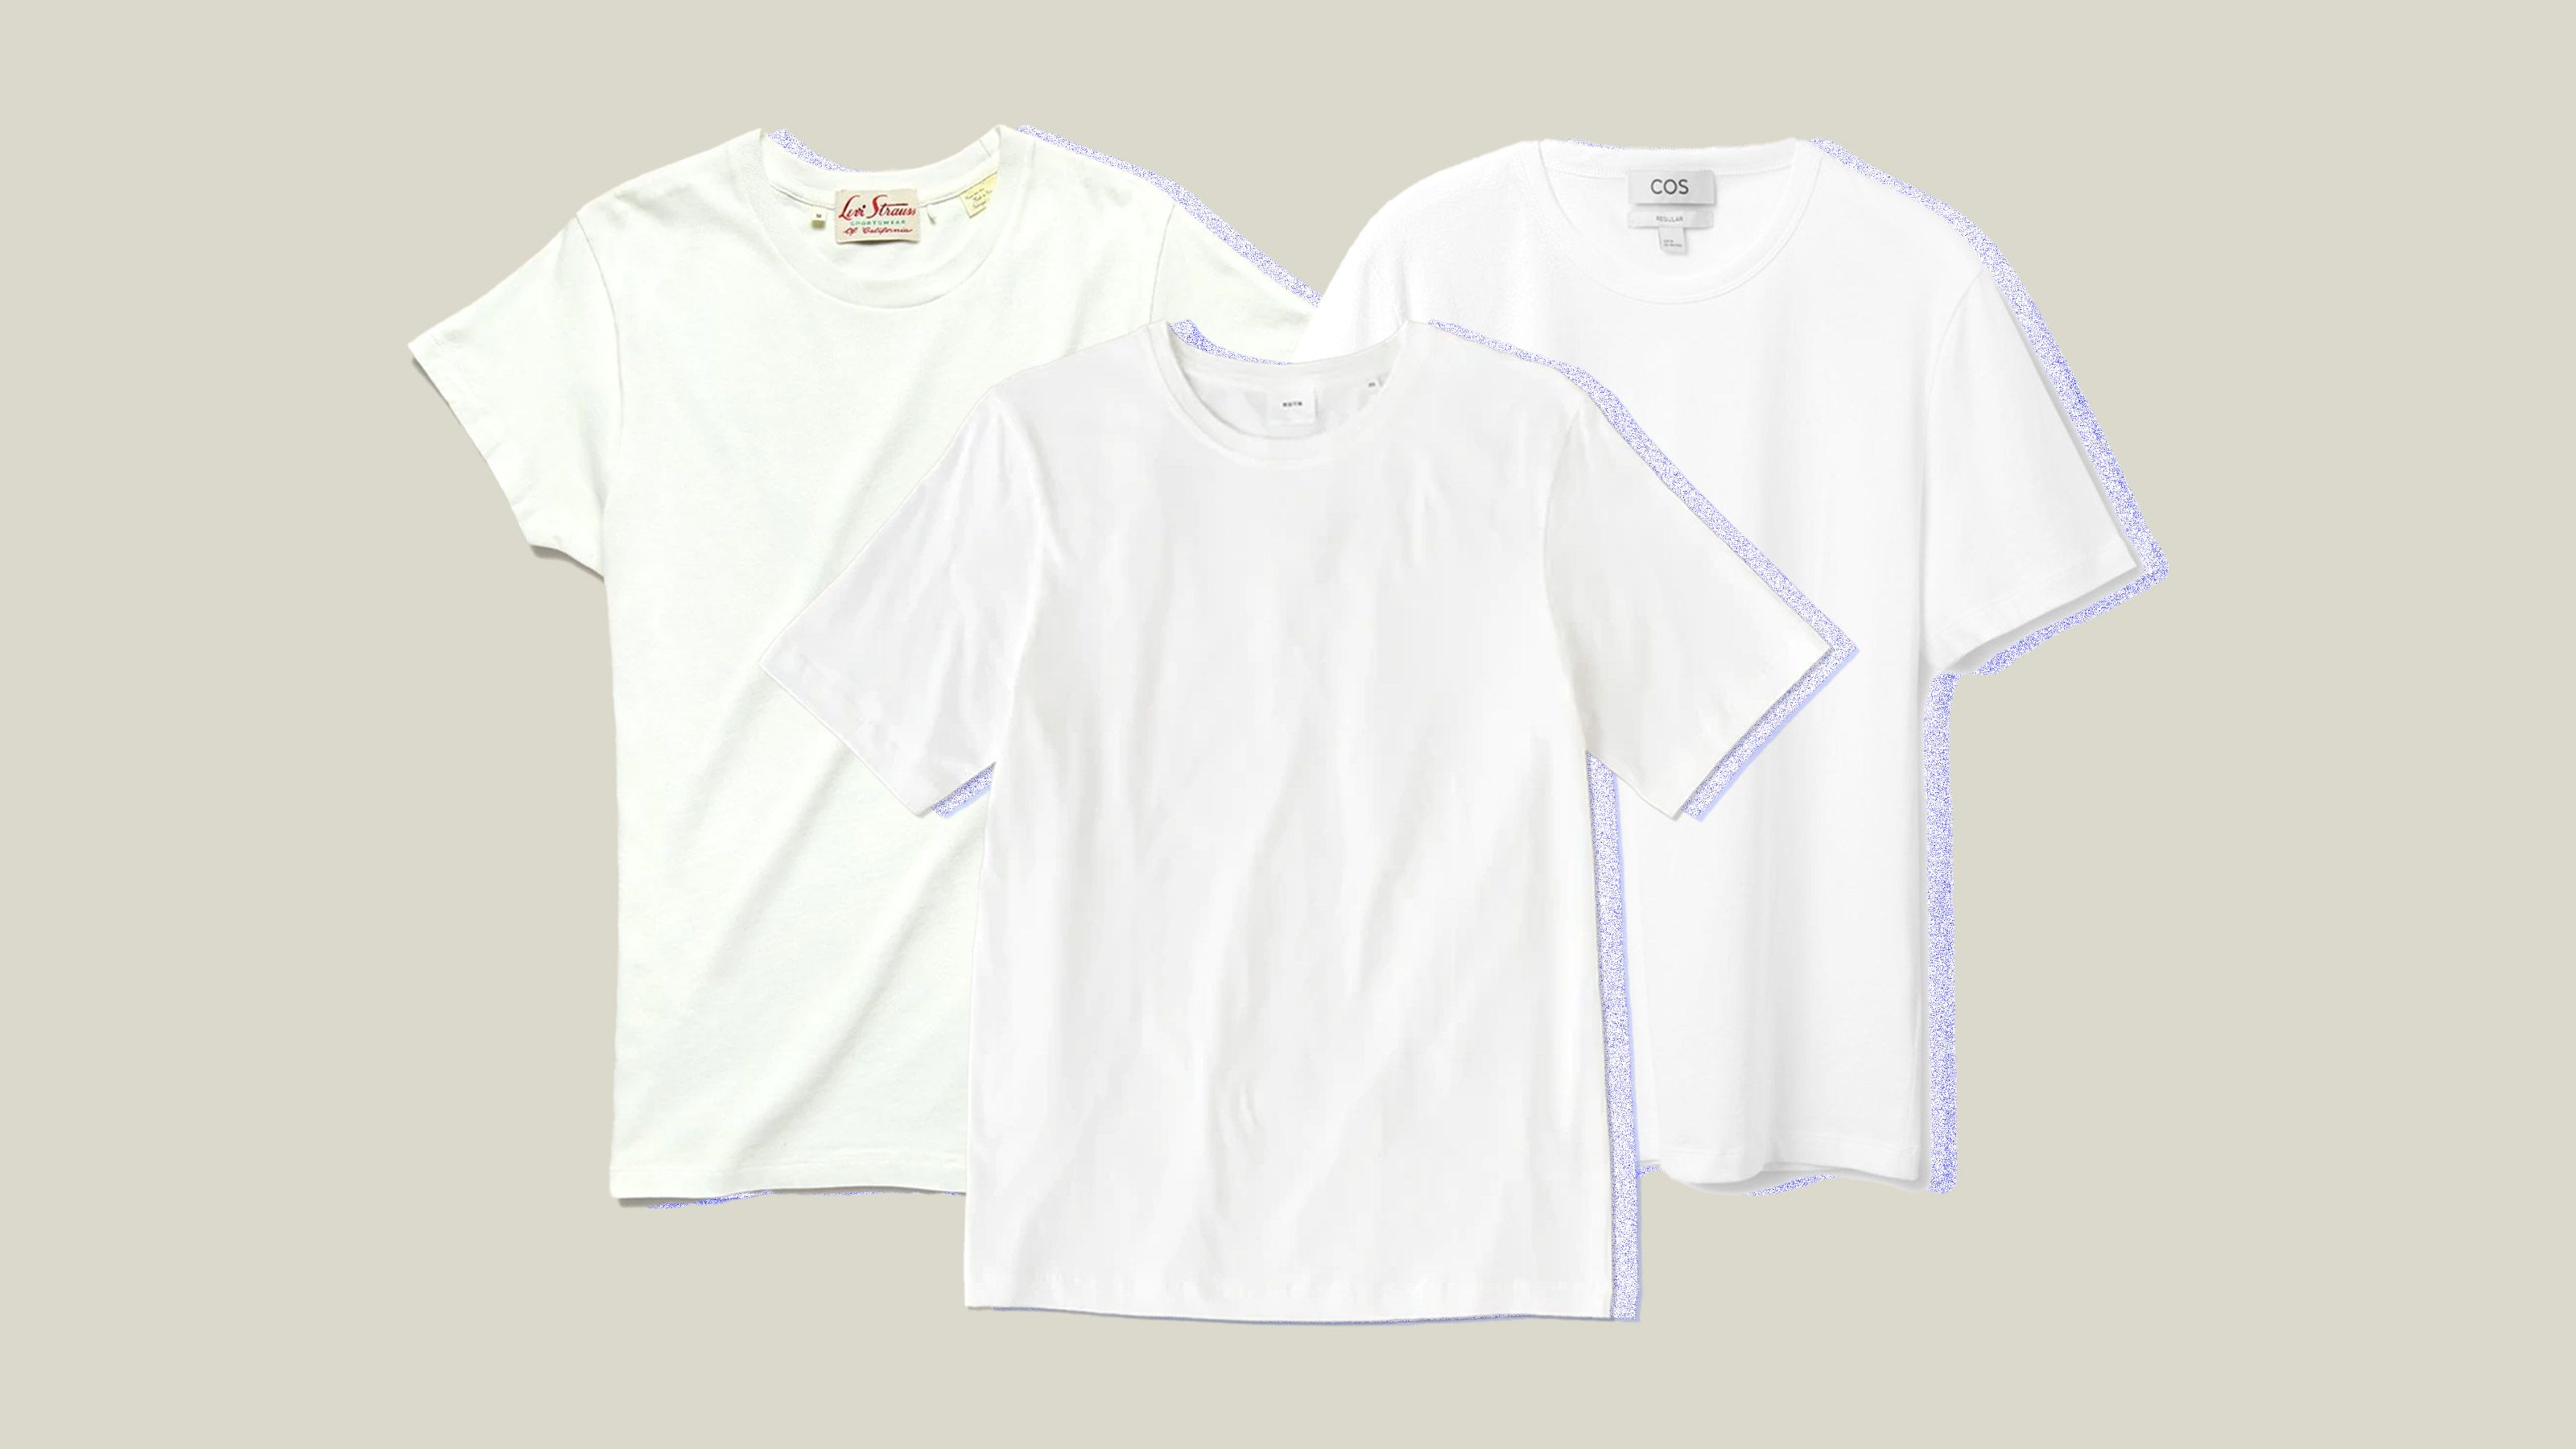 Manager Landsdækkende pyramide Everyone Should Own a Solid White T-Shirt